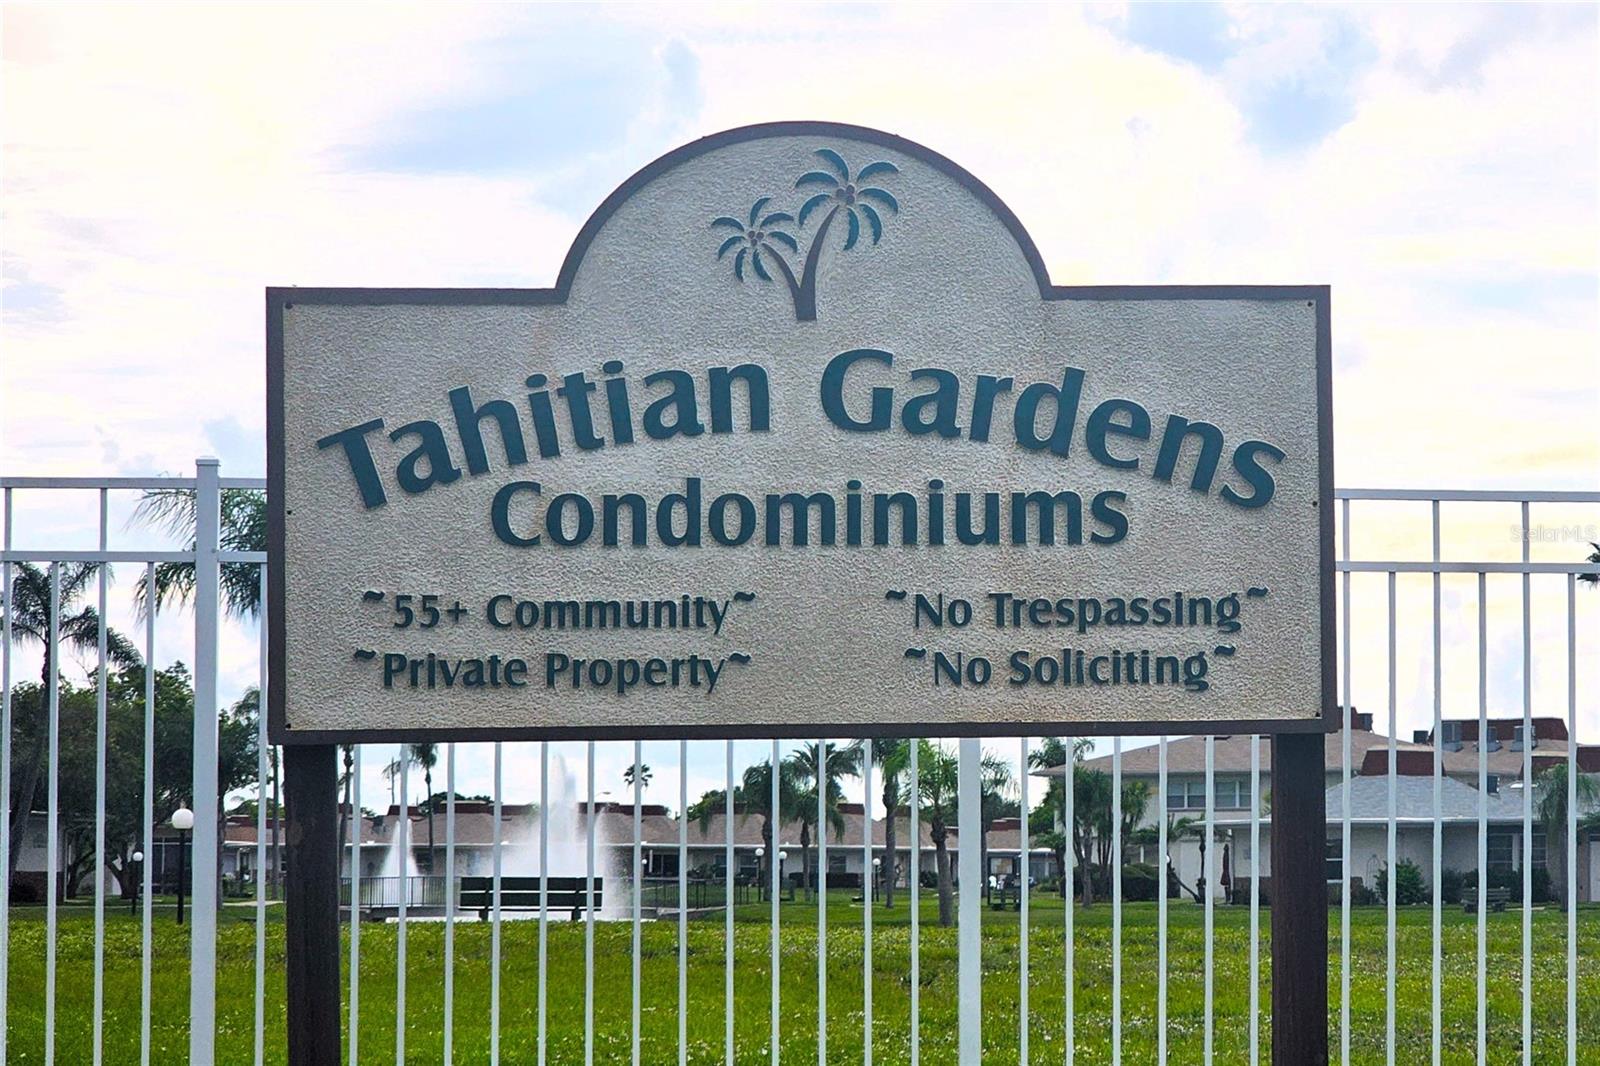 Welcome to Tahitian Gardens!